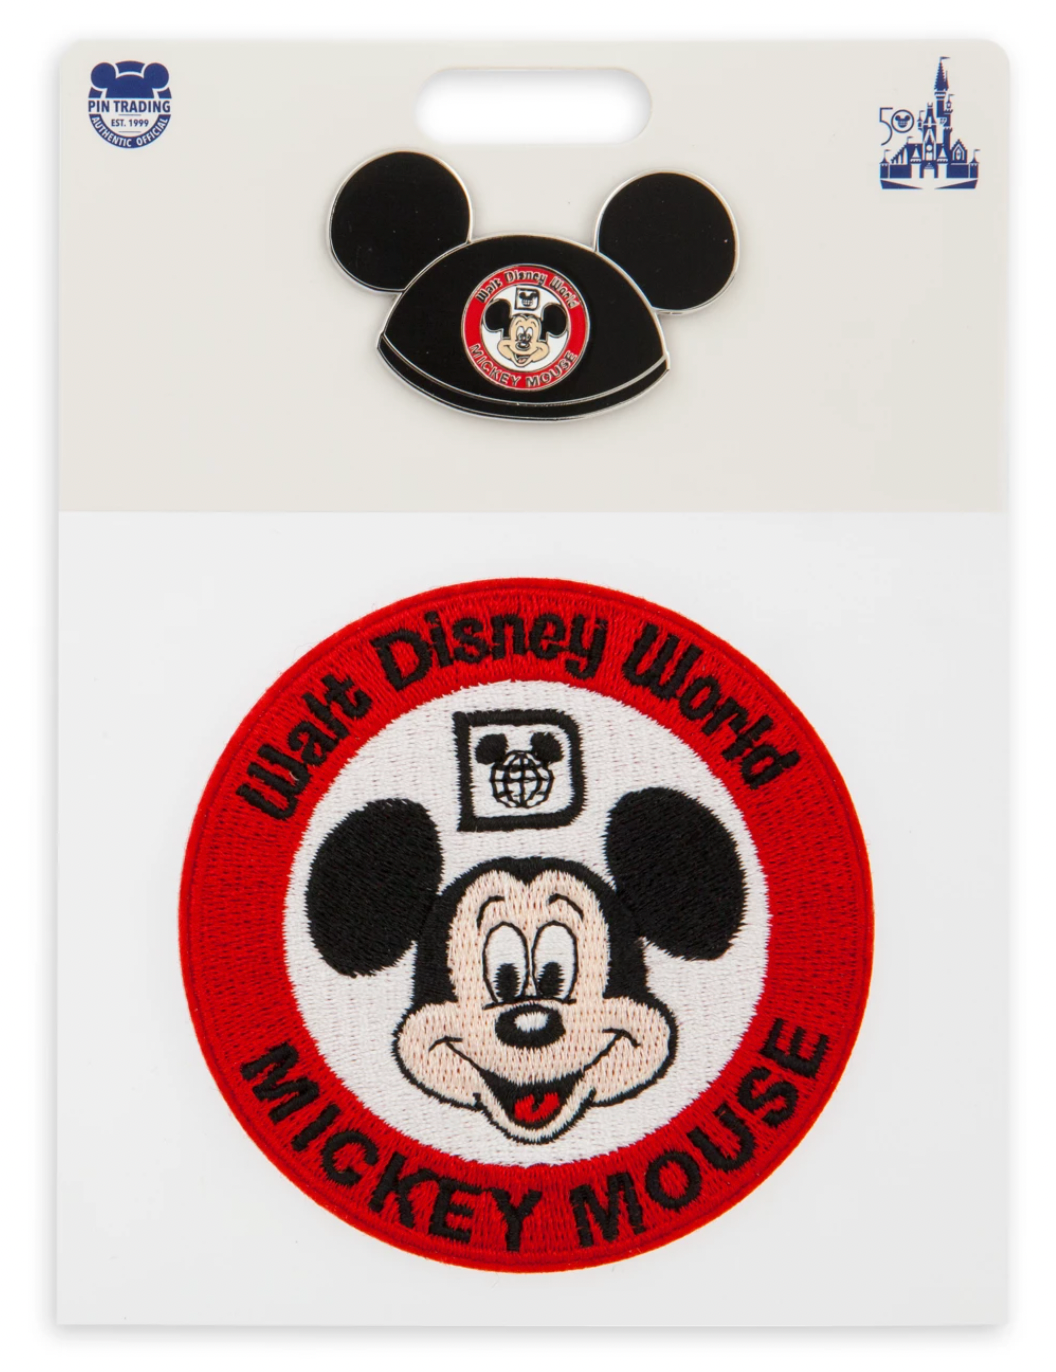 Disney Walt Disney World 50th Anniversary The Mickey Club Pin and Patch Set New